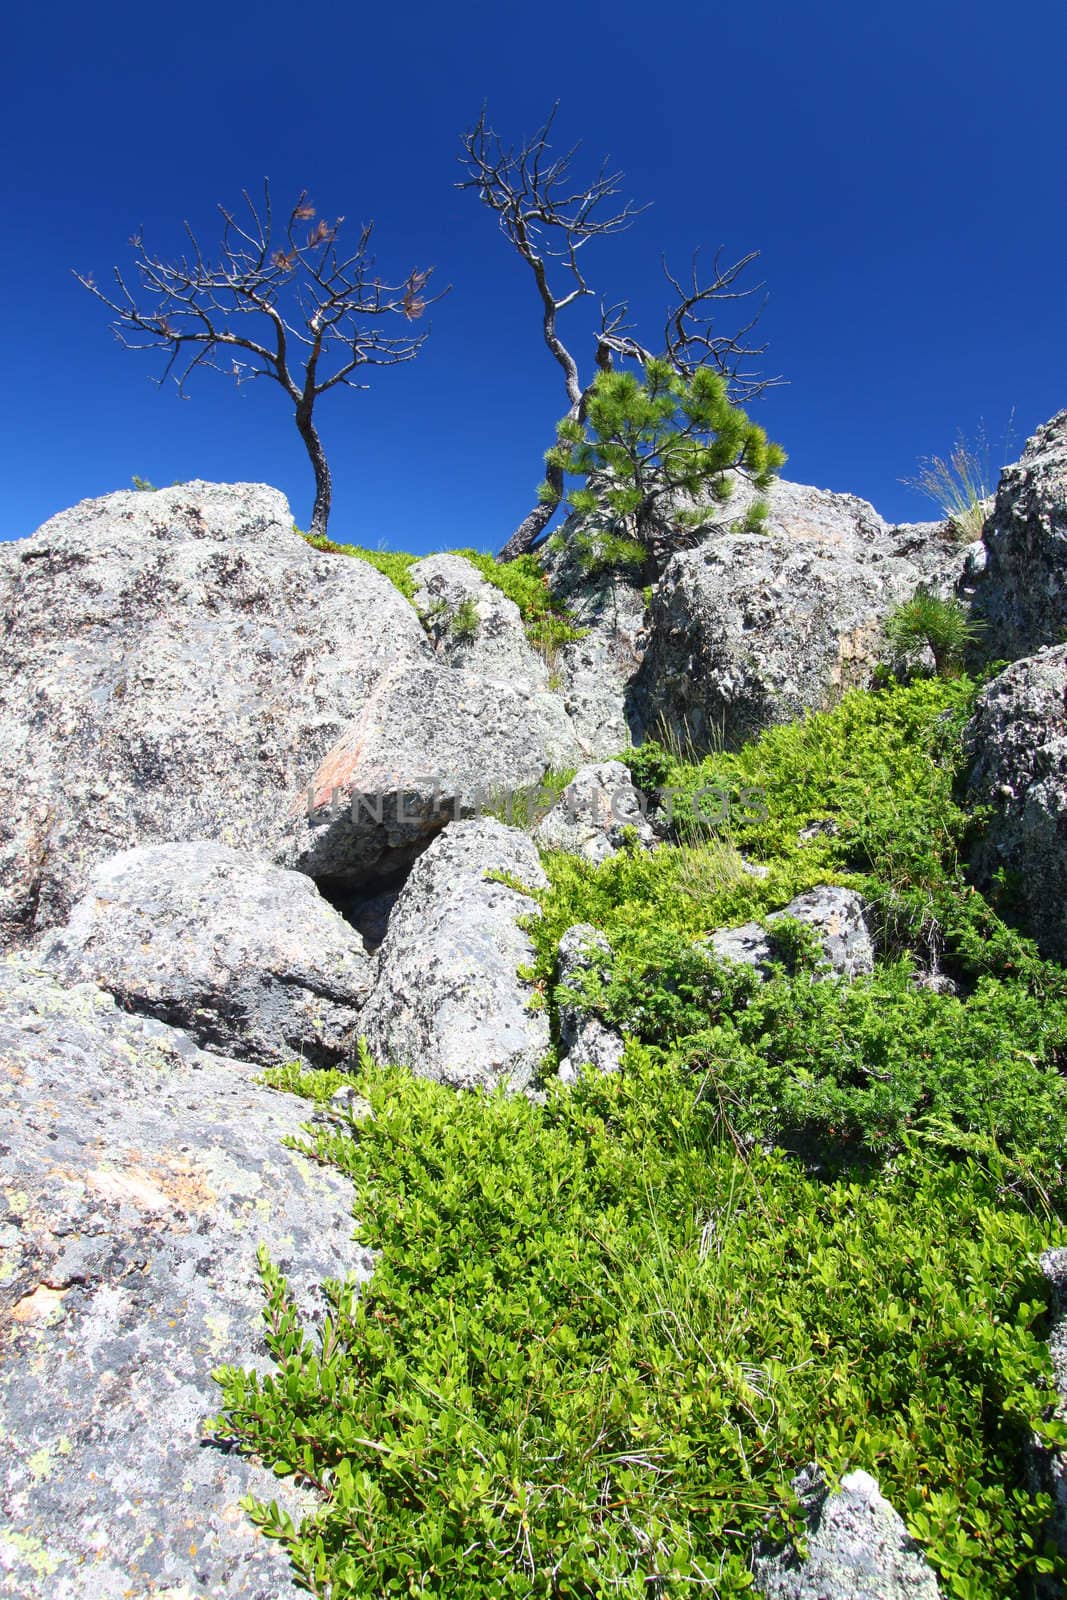 Large boulders dominate the landscape of the Black Hills National Forest in South Dakota.